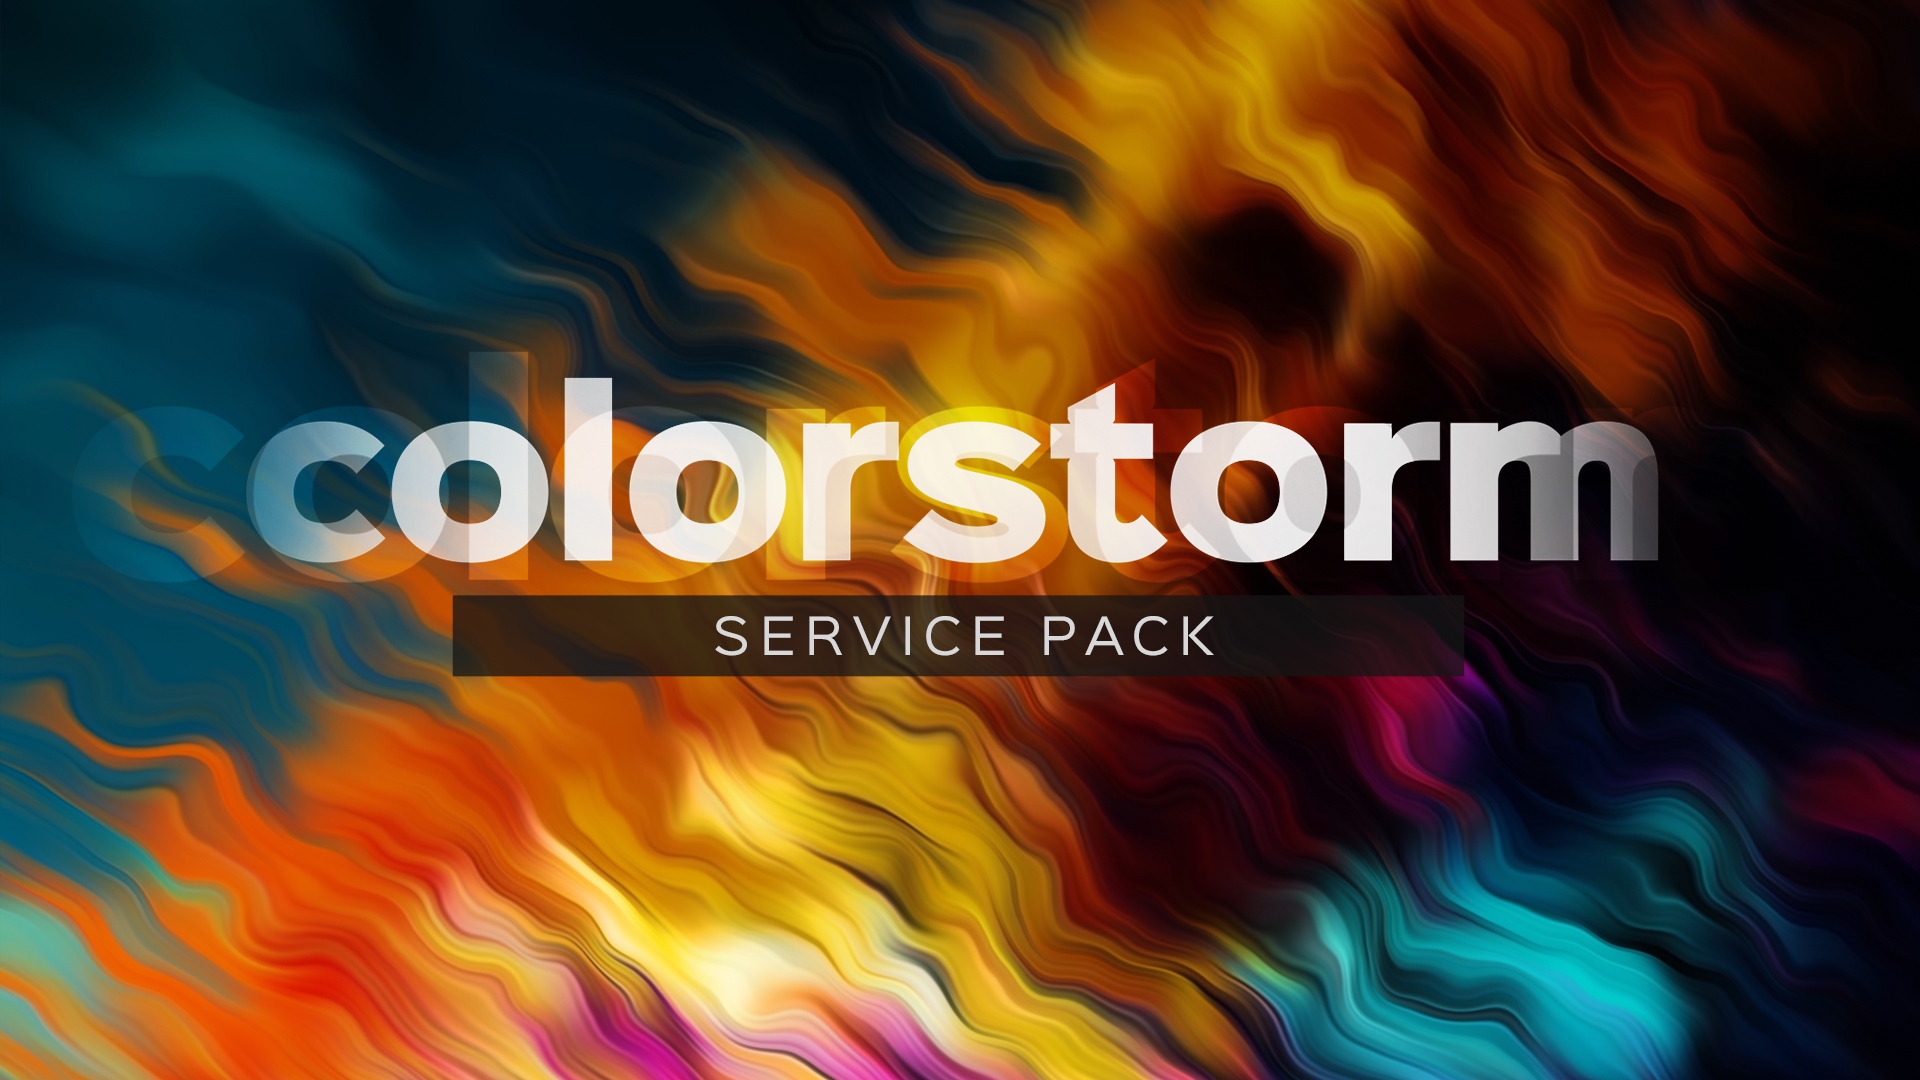 Colorstorm Service Pack